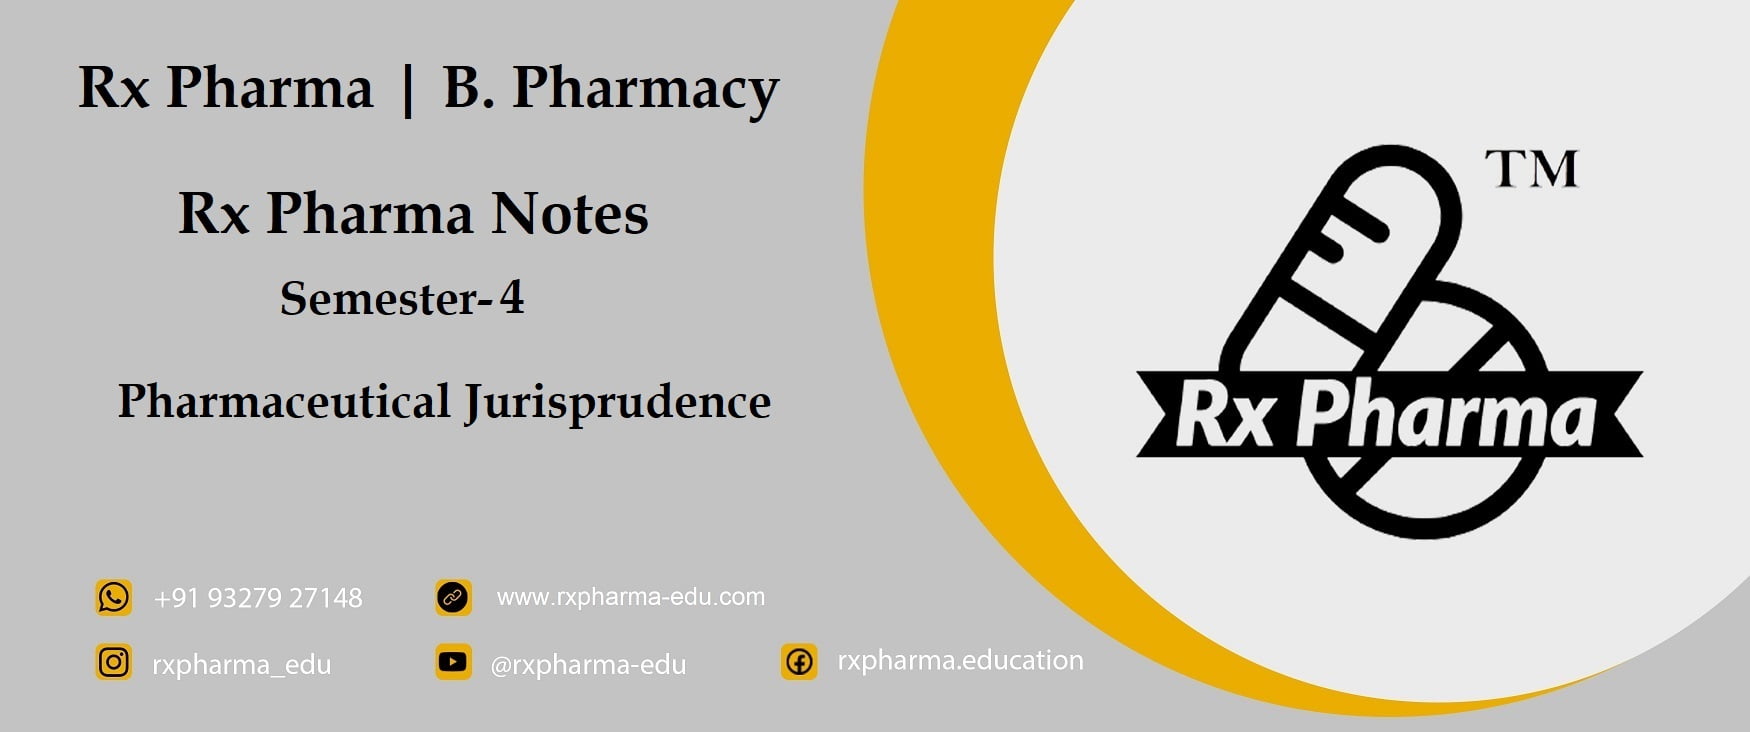 Pharmaceutical Jurisprudence Notes Banner